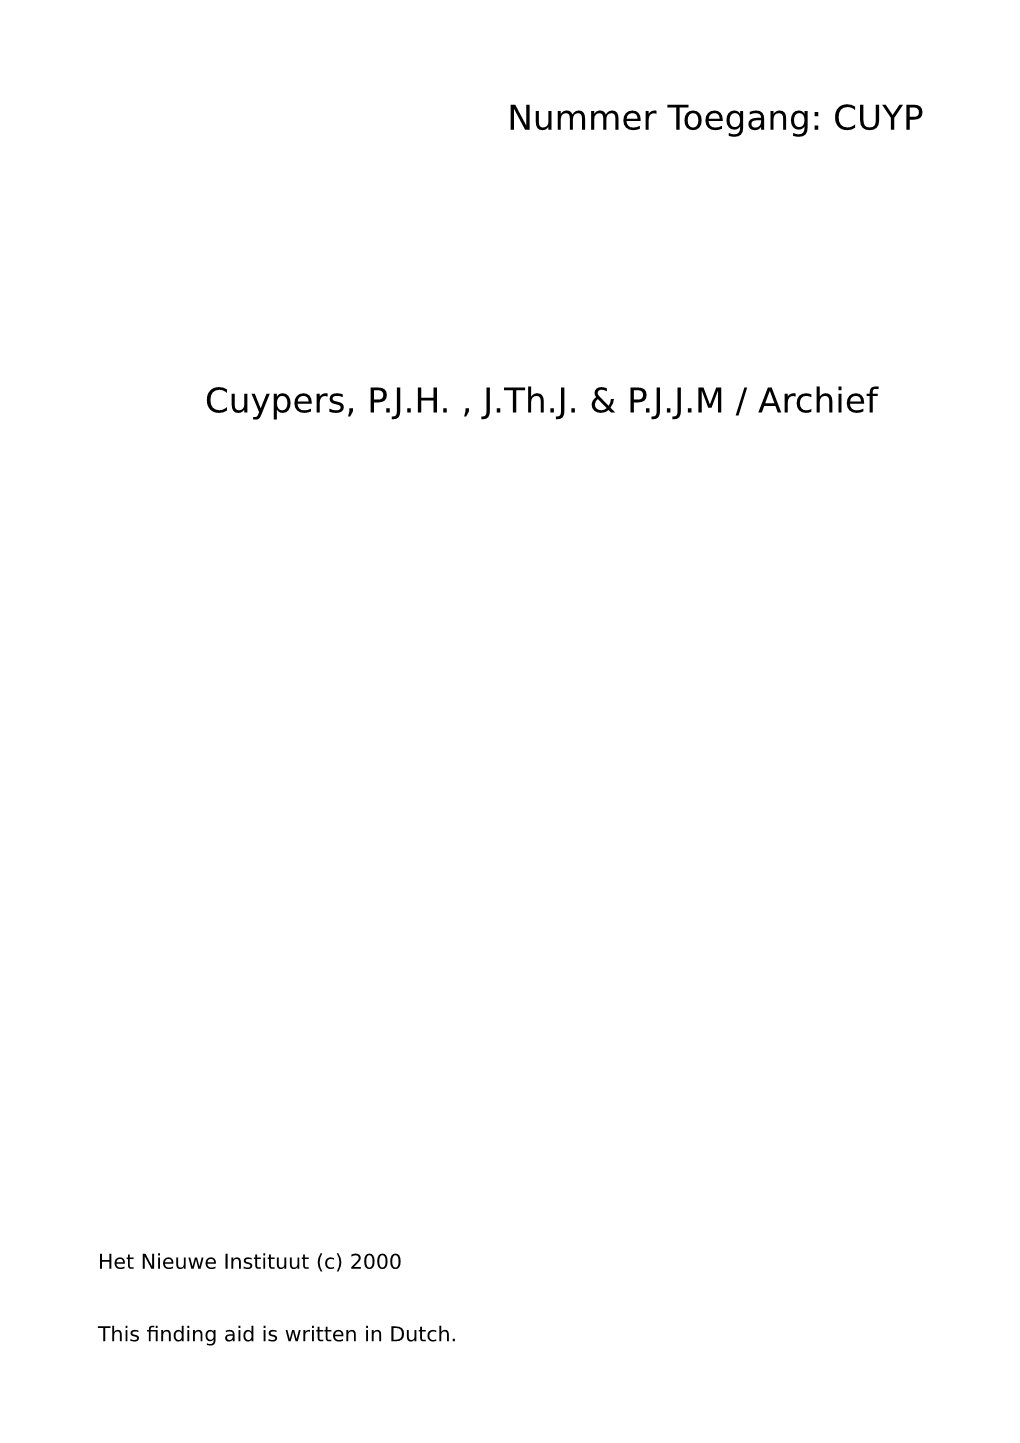 CUYP Cuypers, PJH , J.Th.J. & PJJM / Archief